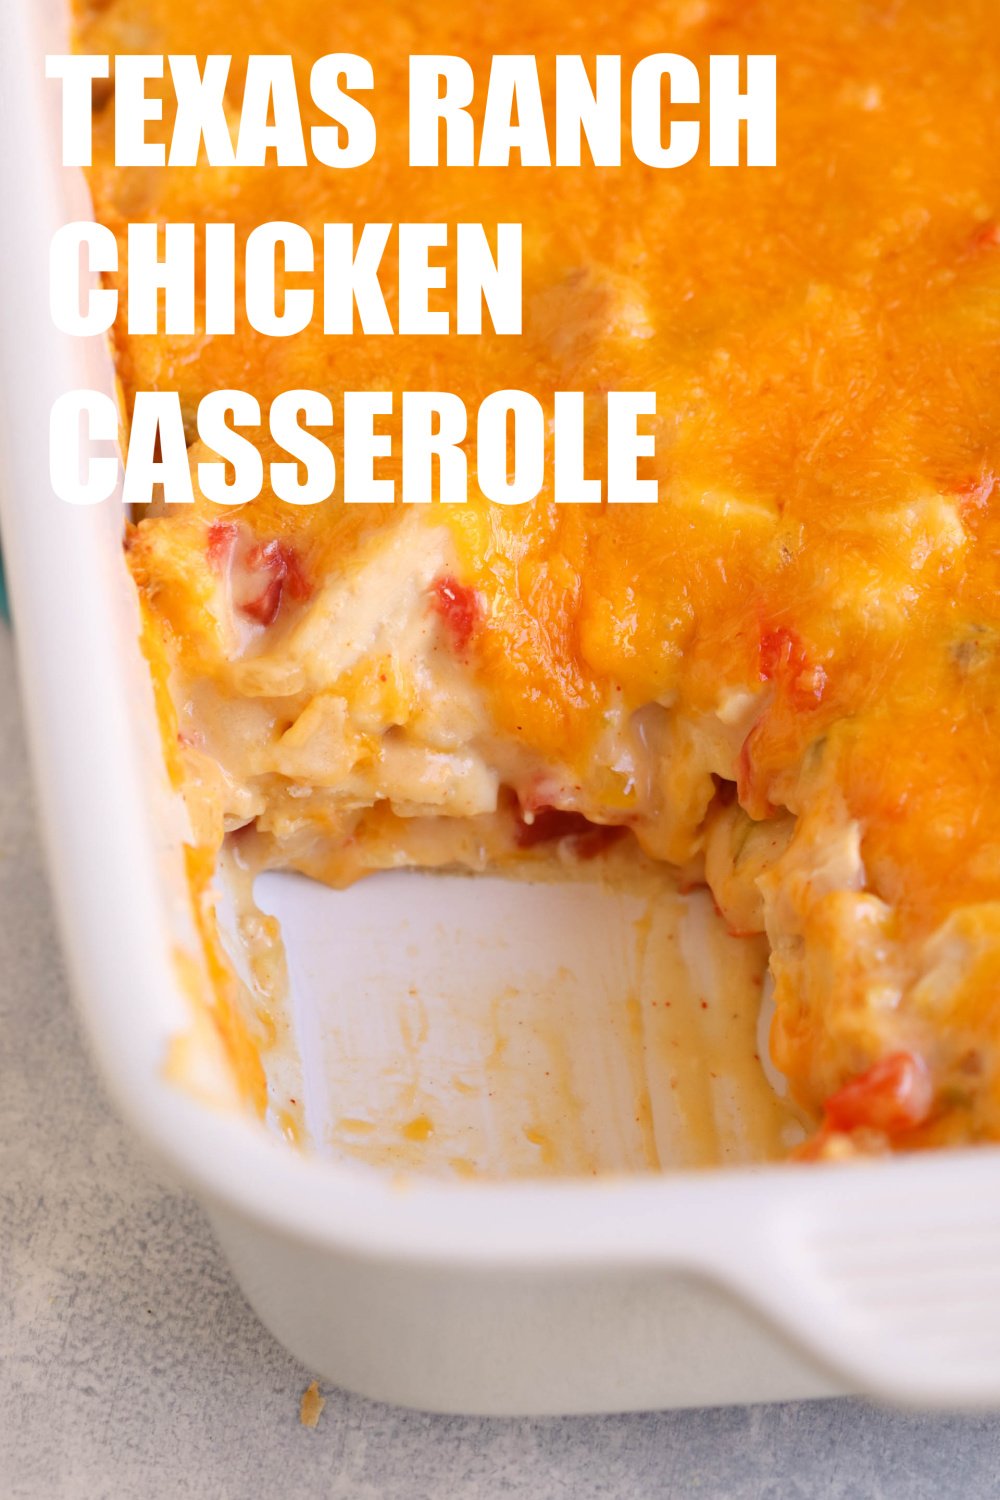 Texas Ranch Chicken Casserole in a casserole dish missing a serving